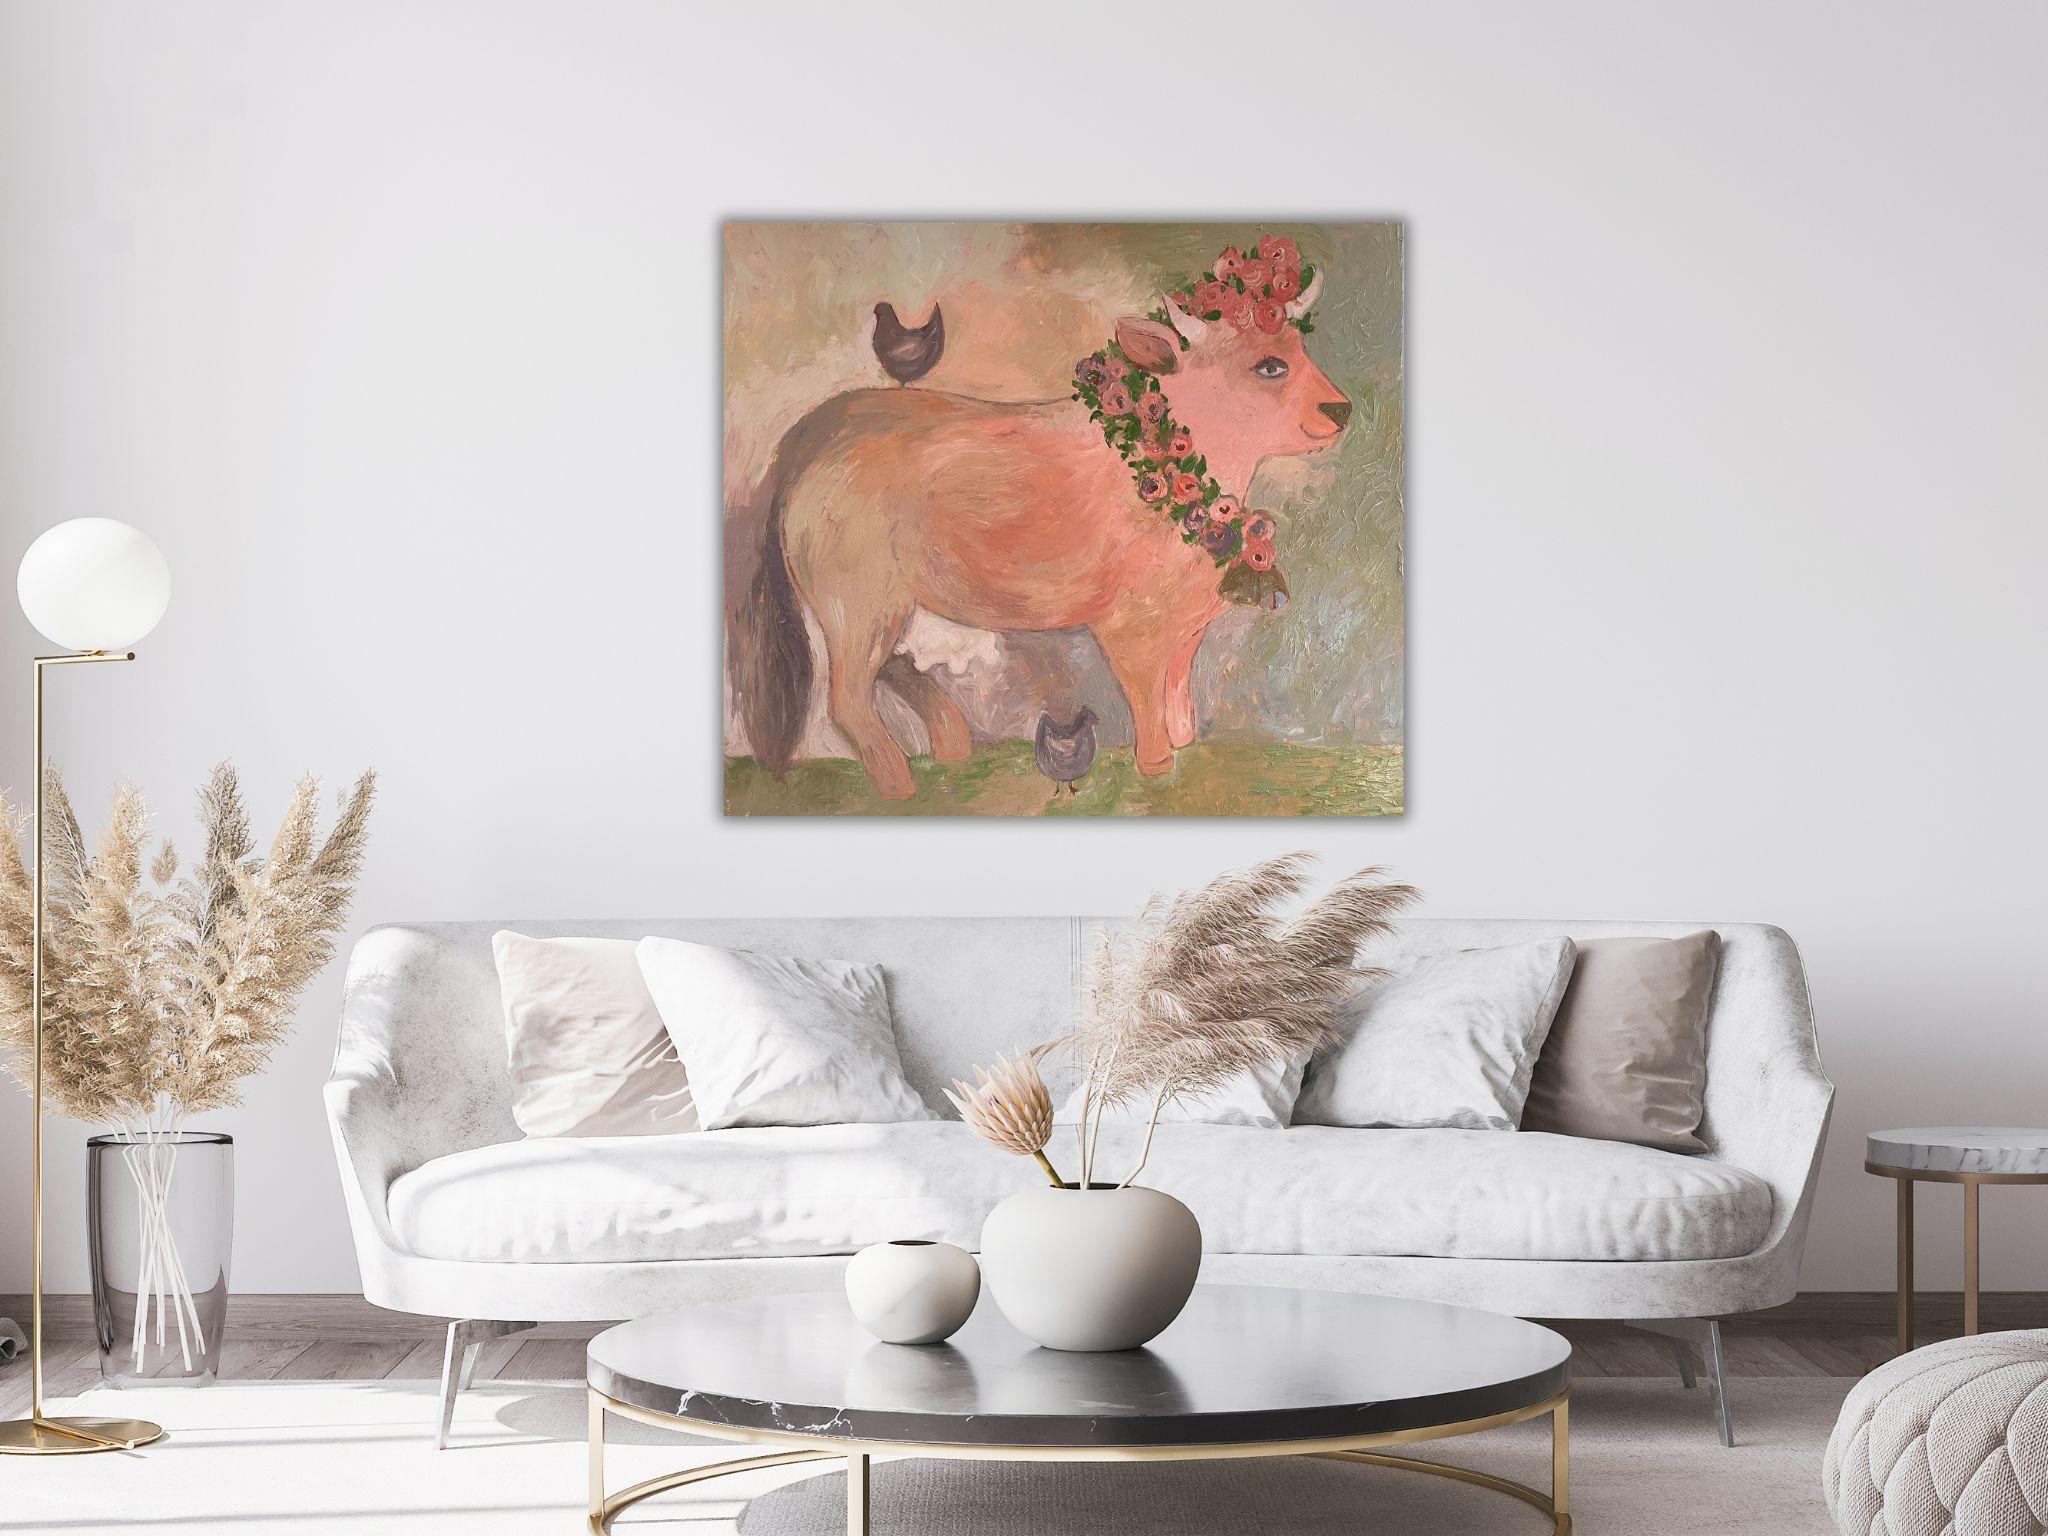 Ironic Cow - Impressionist Painting by Dasha Pogodina